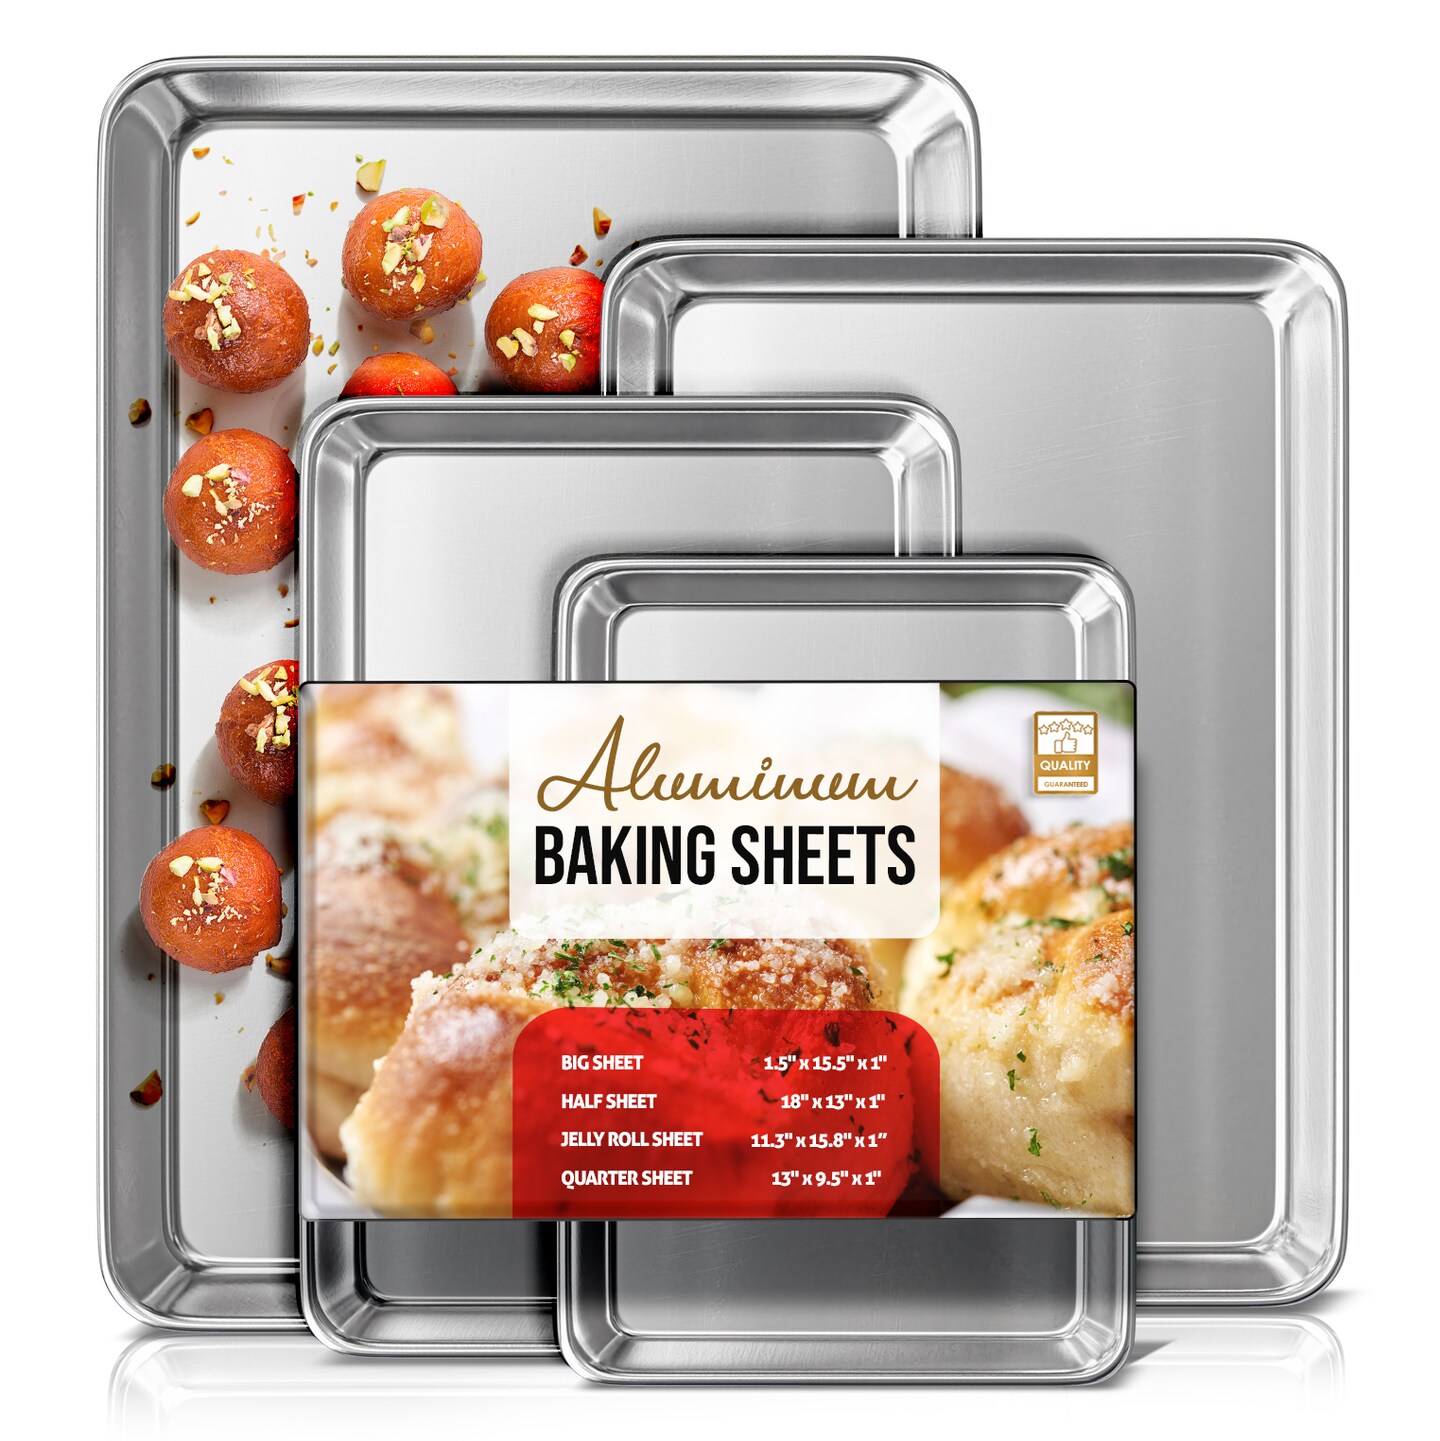 EATEX Aluminum Large Baking Sheet Pan, Steel Nonstick Cookie sheet